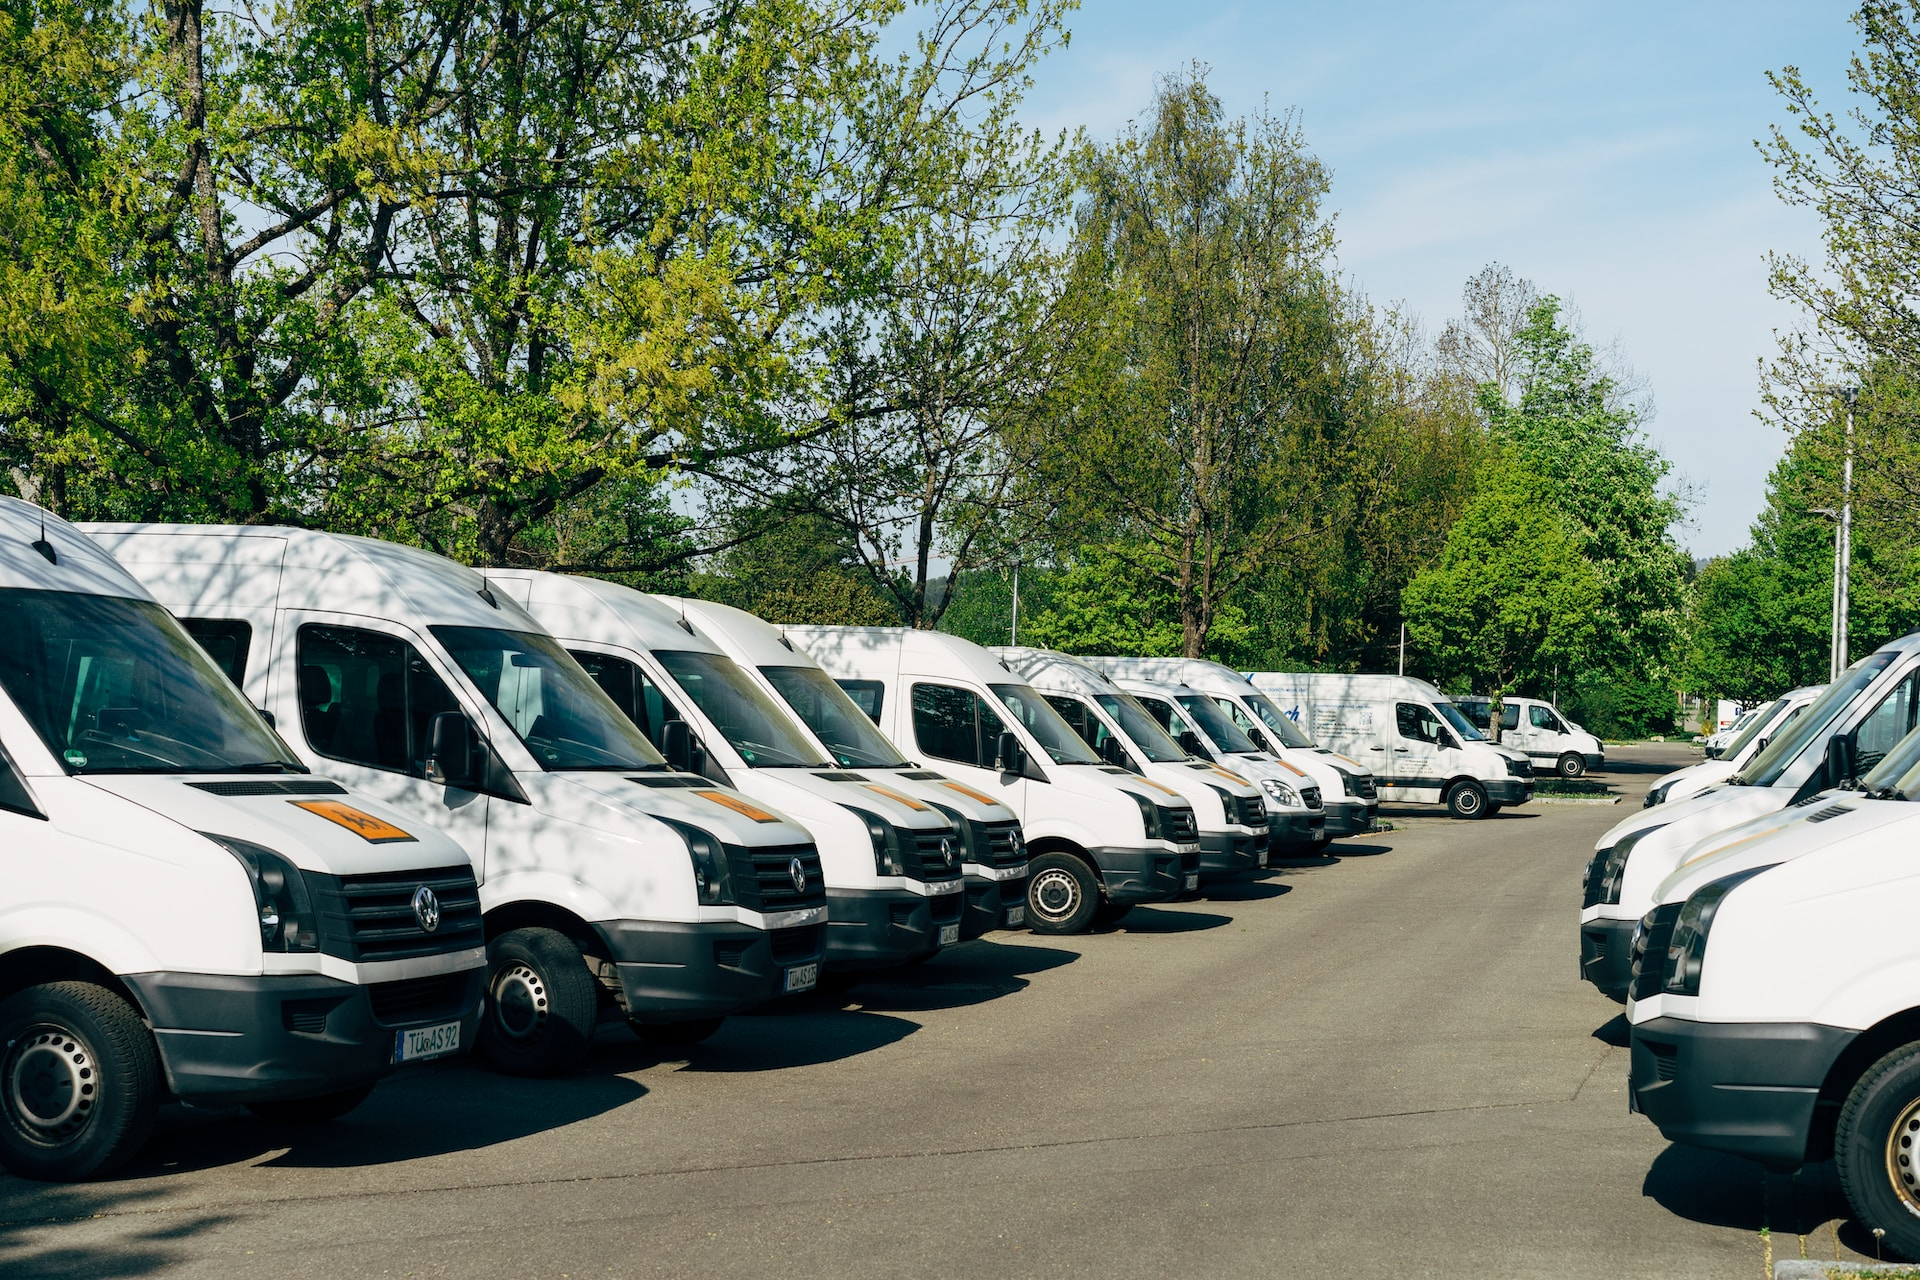 Vans parked in parking lot during daytime